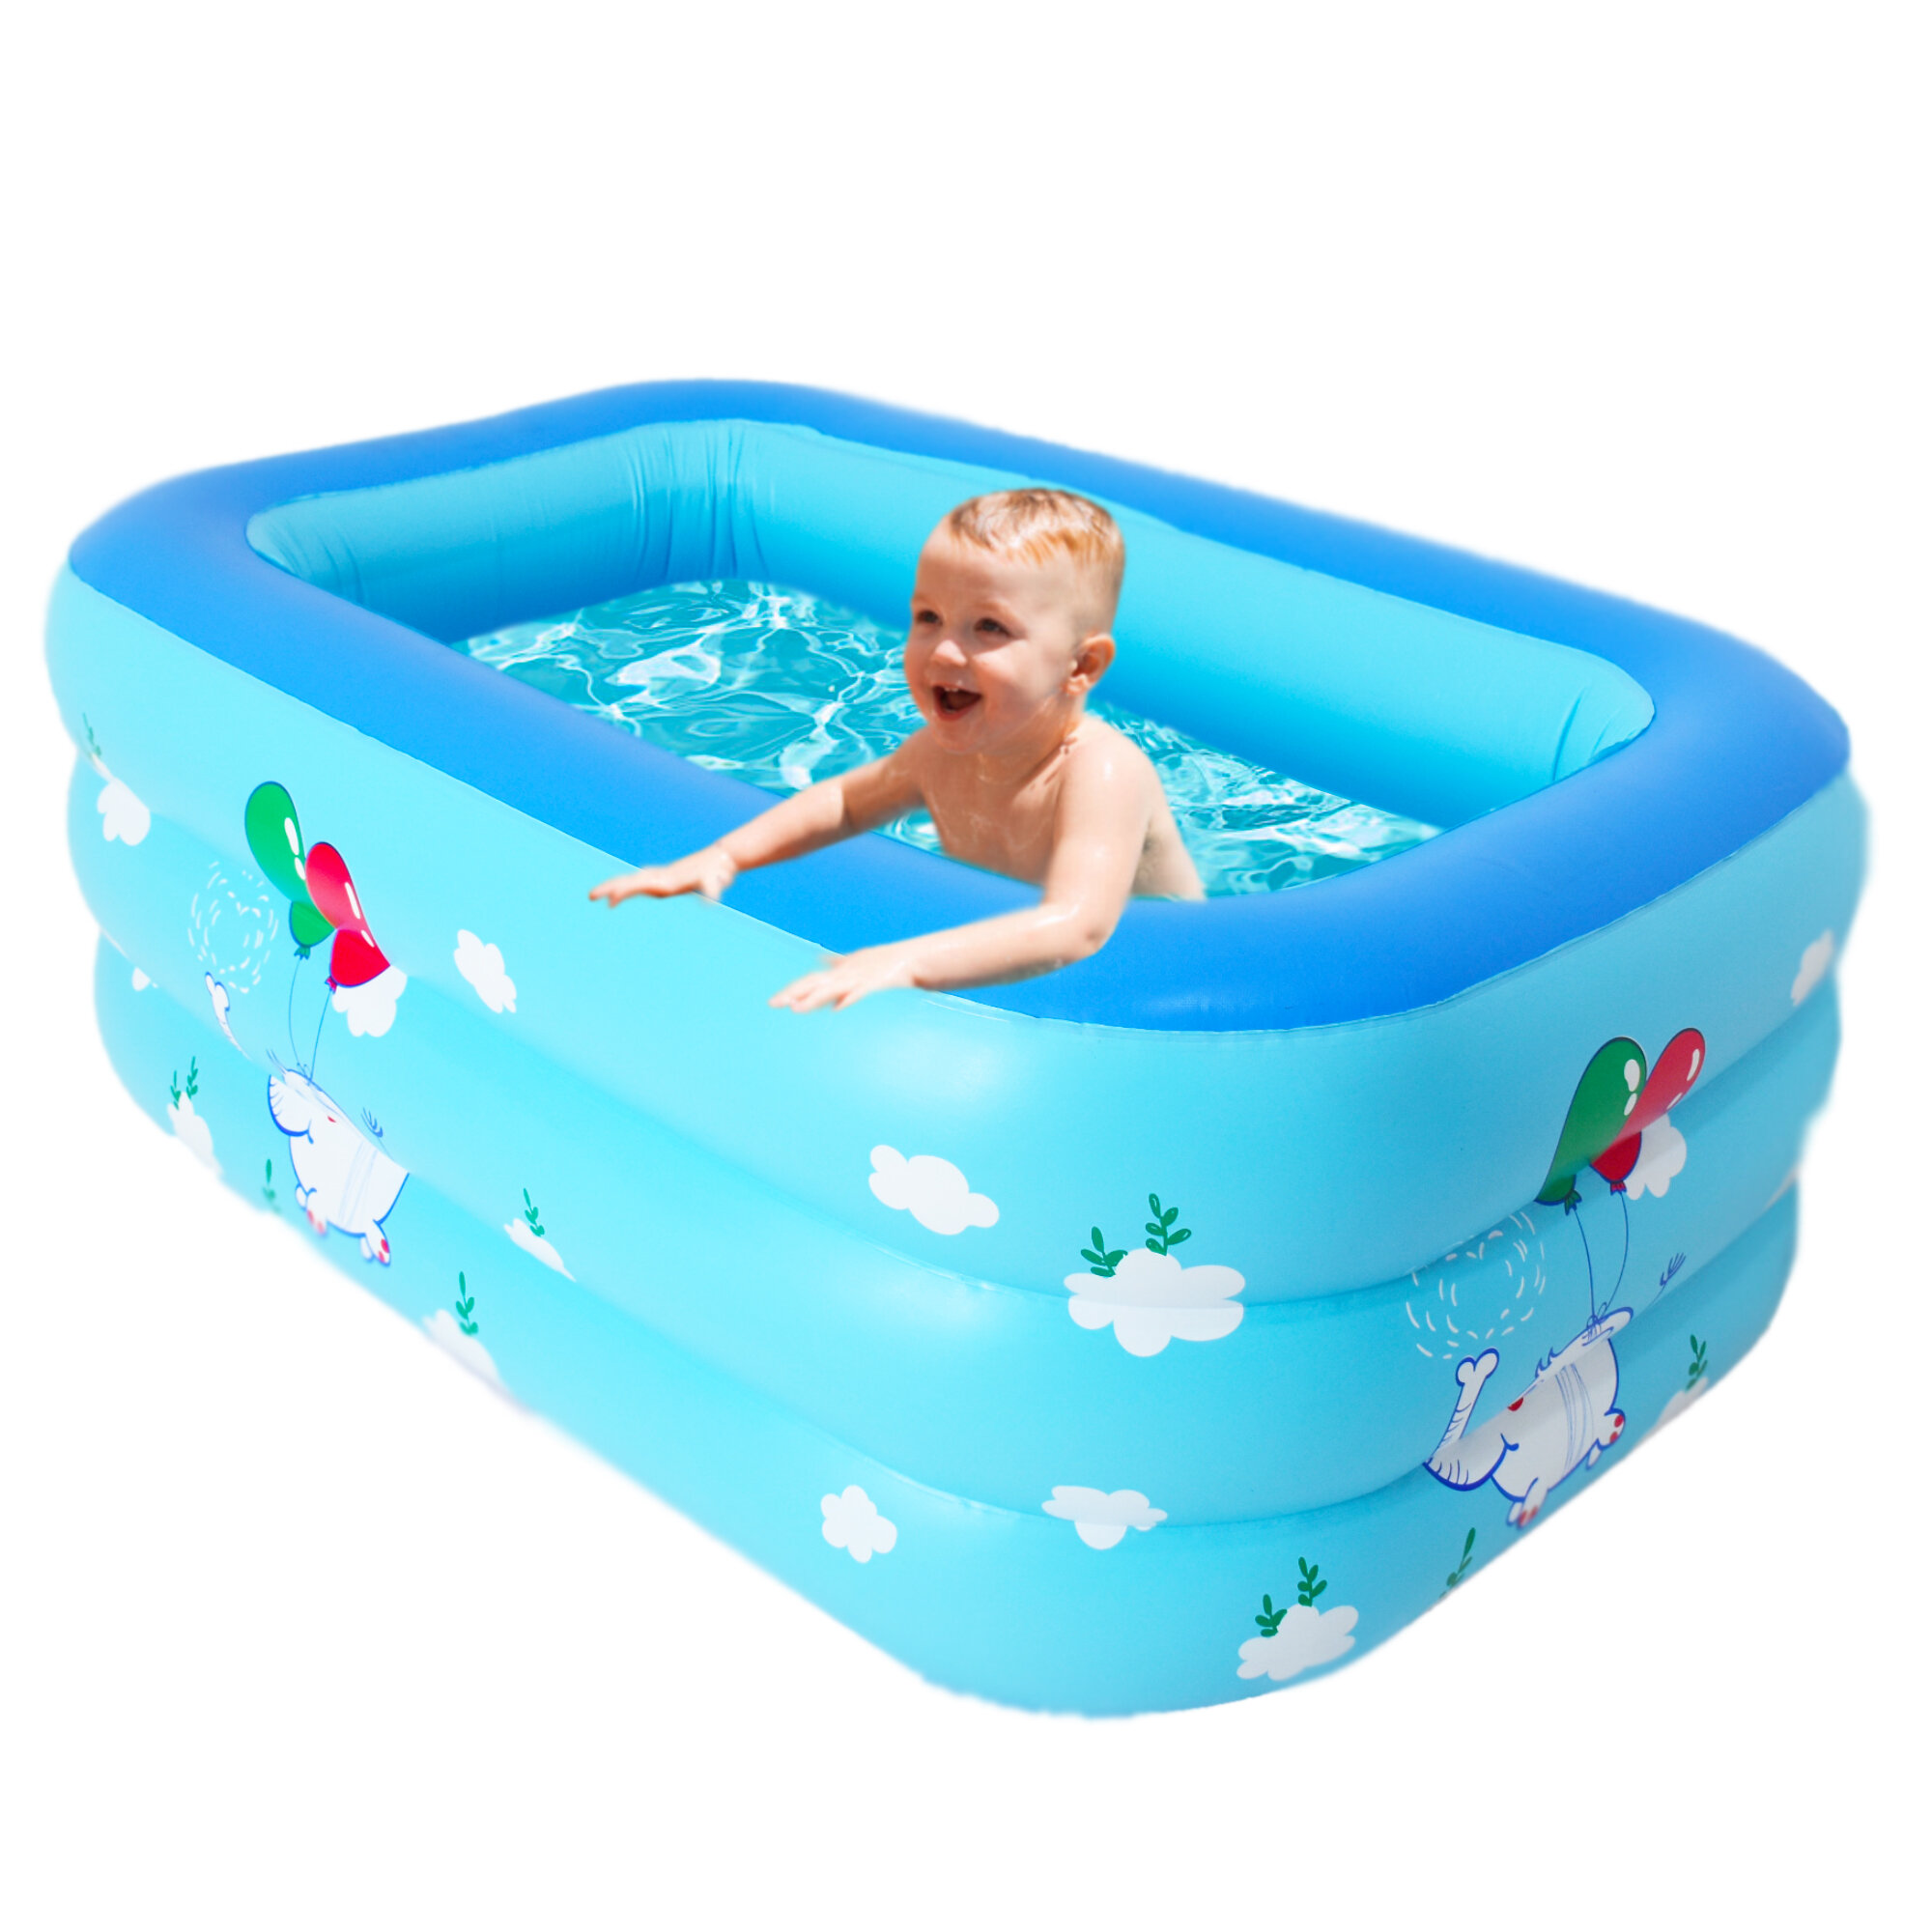 baby-fair BabySPA Home Spa 3 Layer Pool (150 x 100 x 53cm)